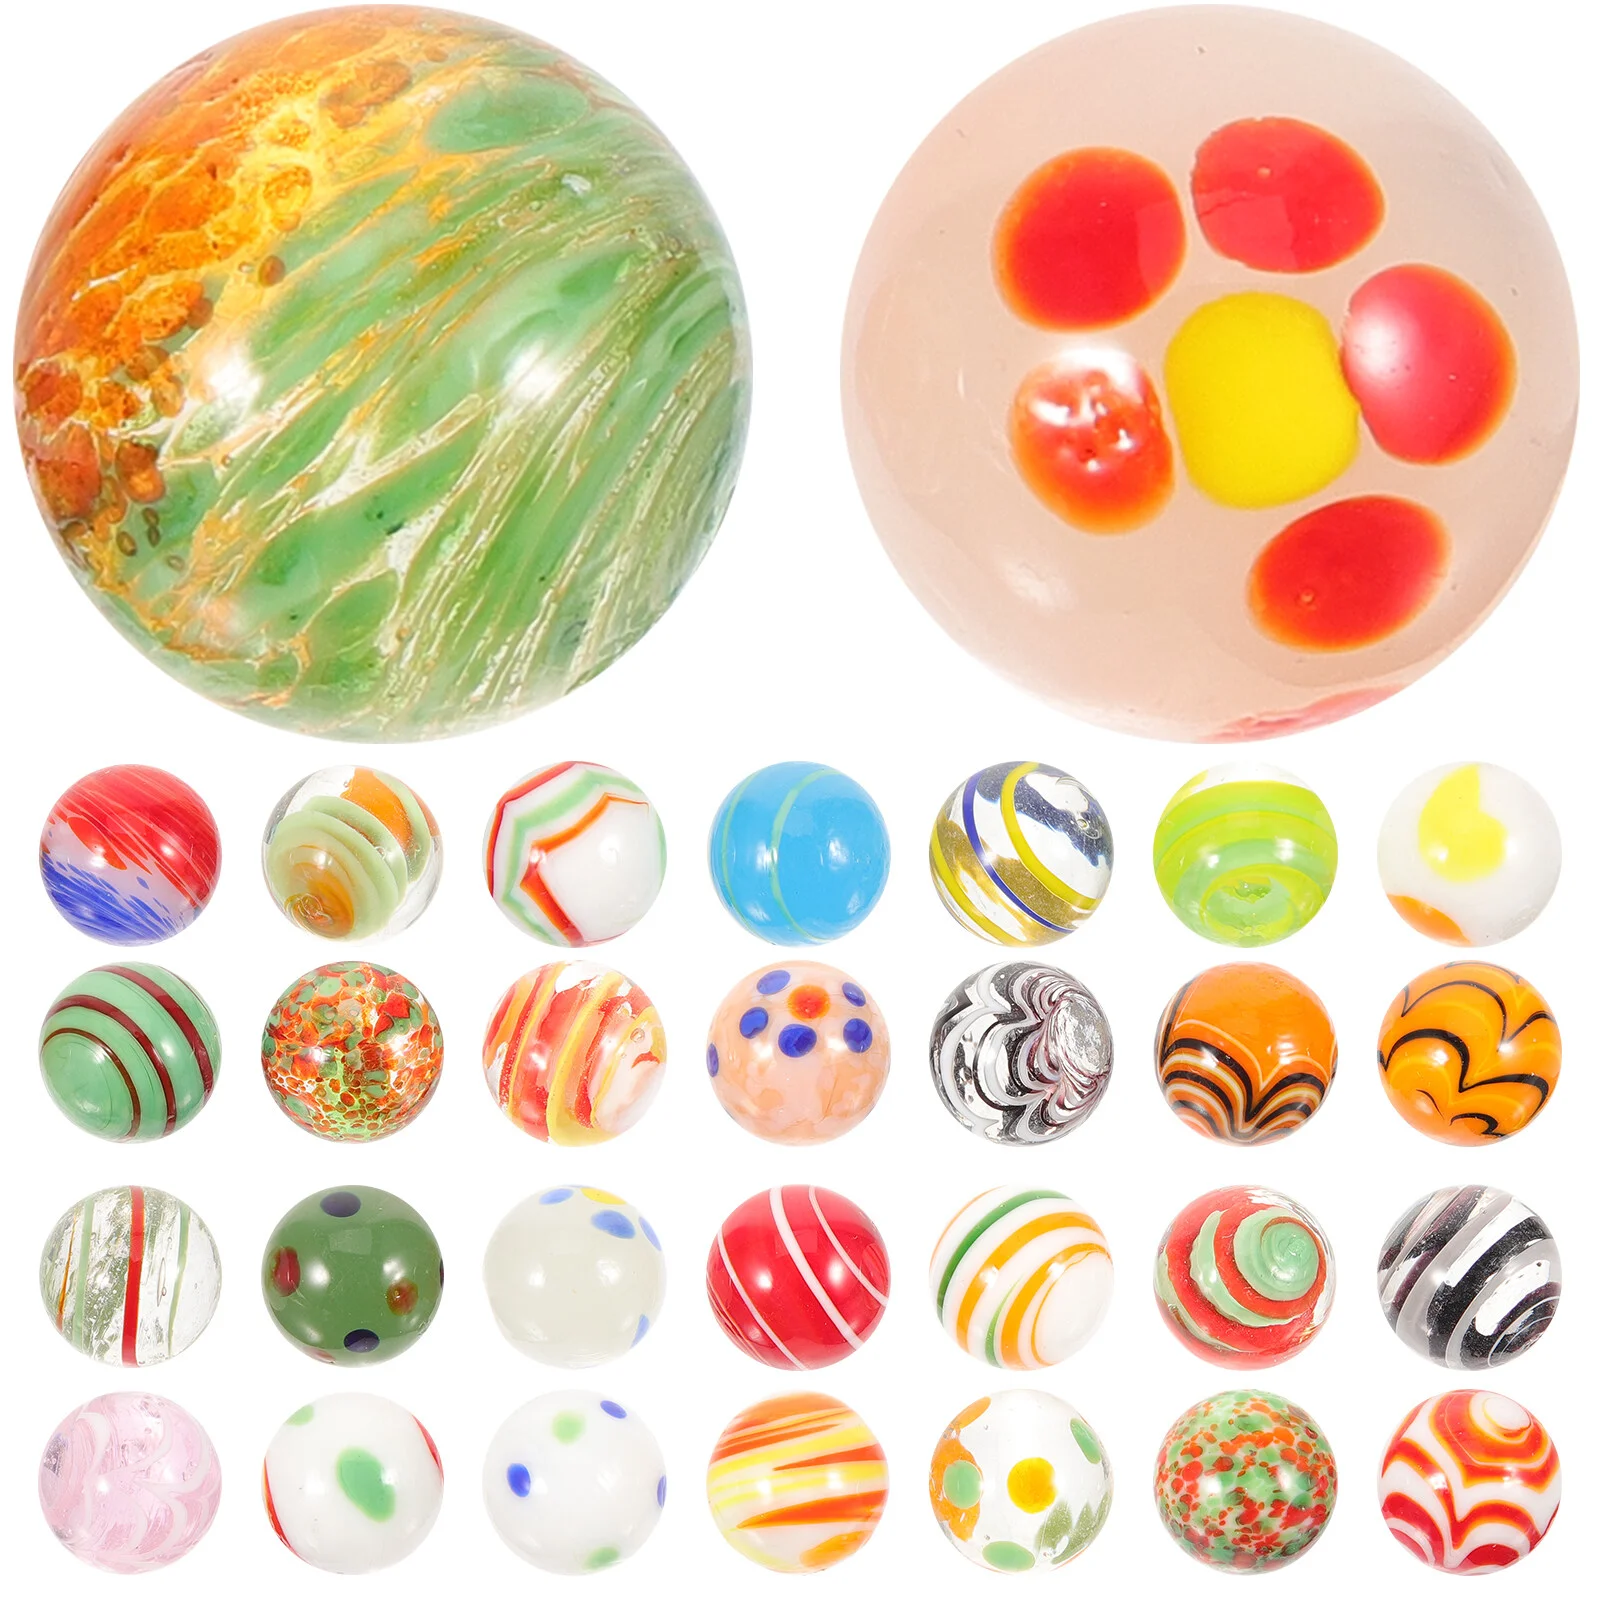 

30 Pcs Handmade Glass Ball Large Marbles Kids Playthings Toy's Fish Tank Decors Decorative Balls Game Child Bulk Crafts